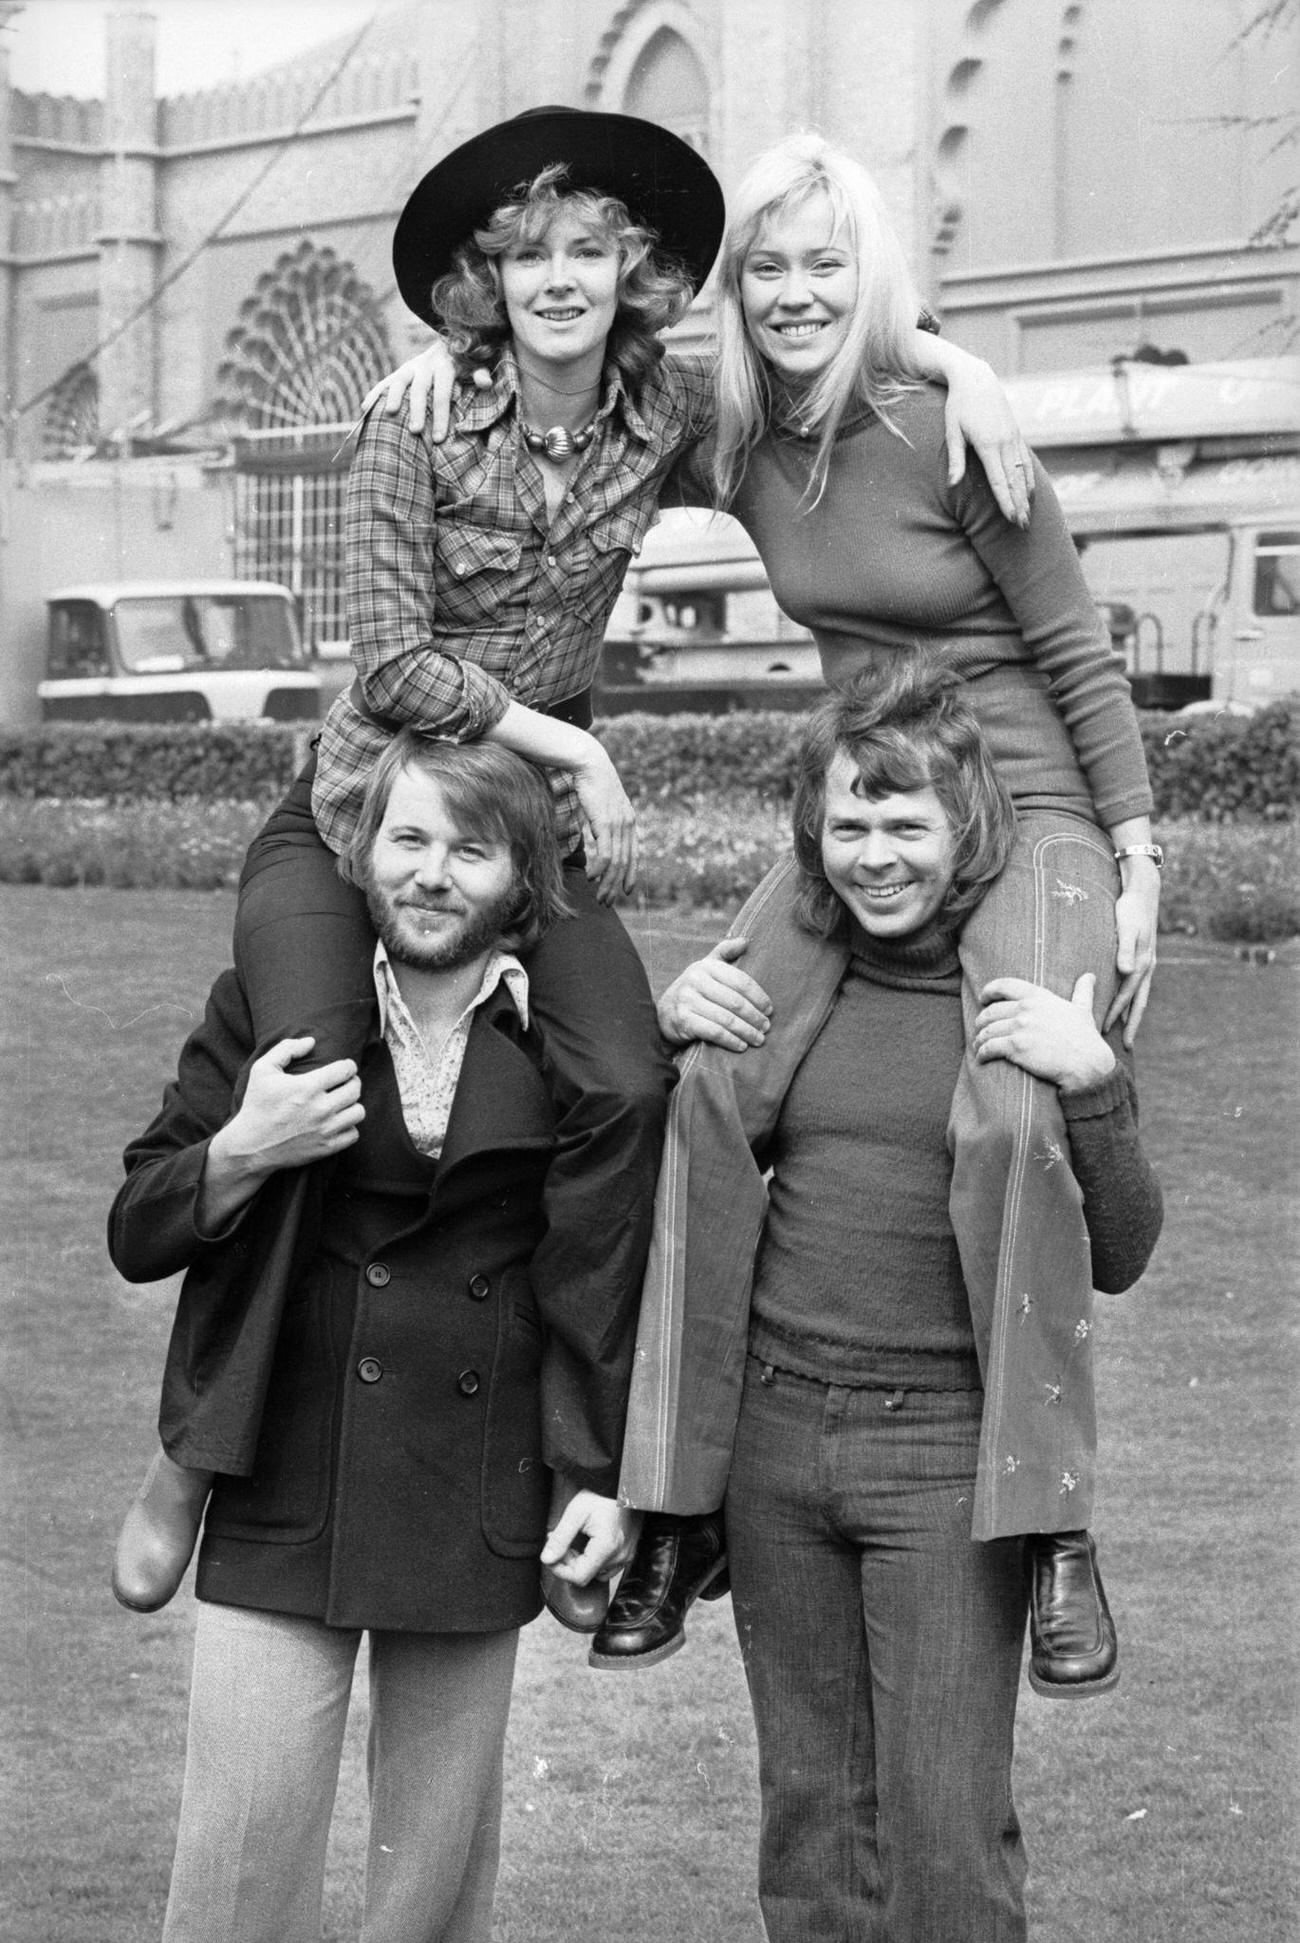 Benny Andersson, Anni-Frid Lyngstad, Agnetha Faltskog and Bjorn Ulvaeus of ABBA at Brighton, 1974